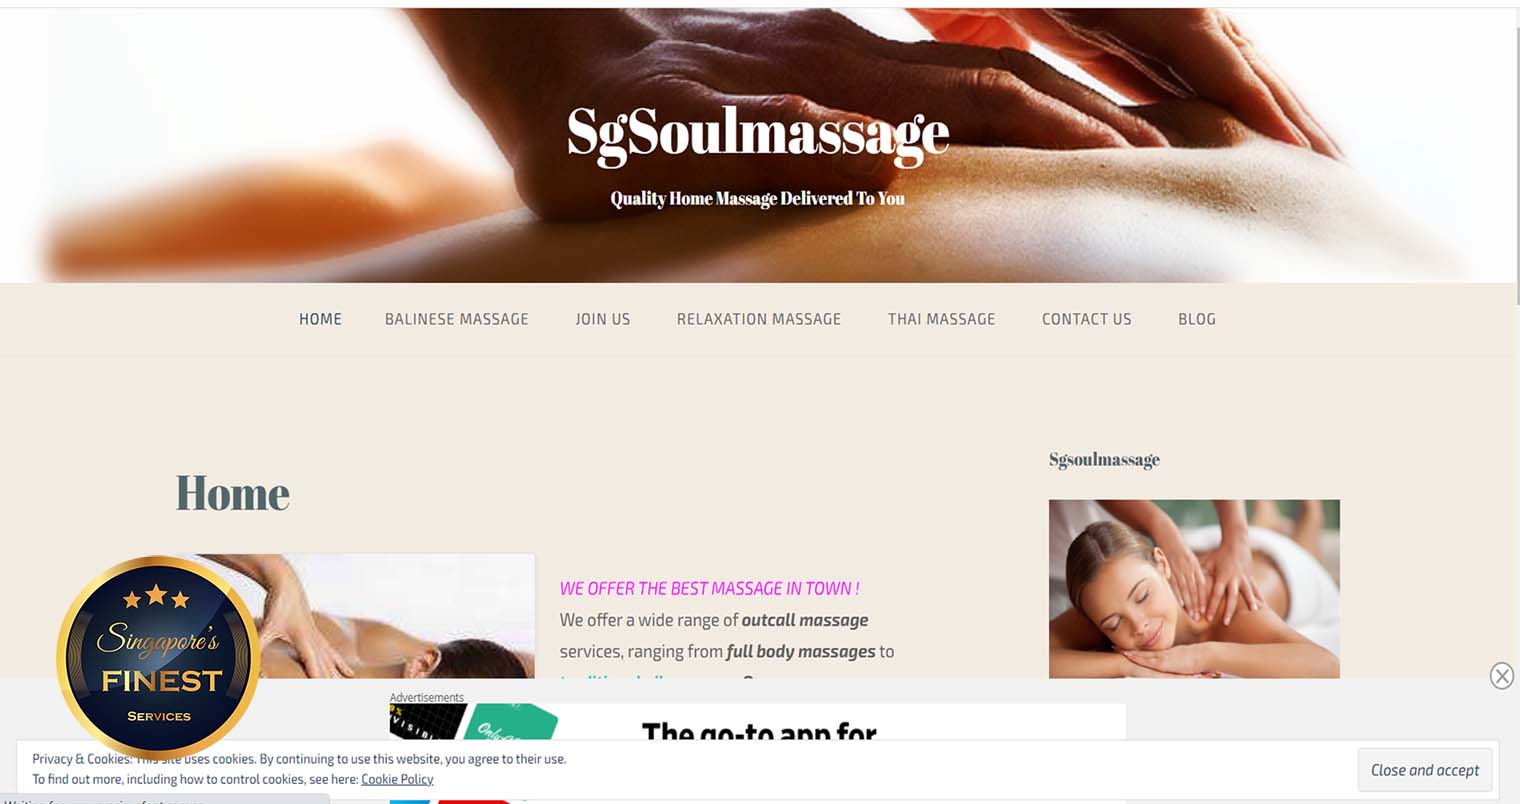 SG Soulmassage - Home Massage Singapore